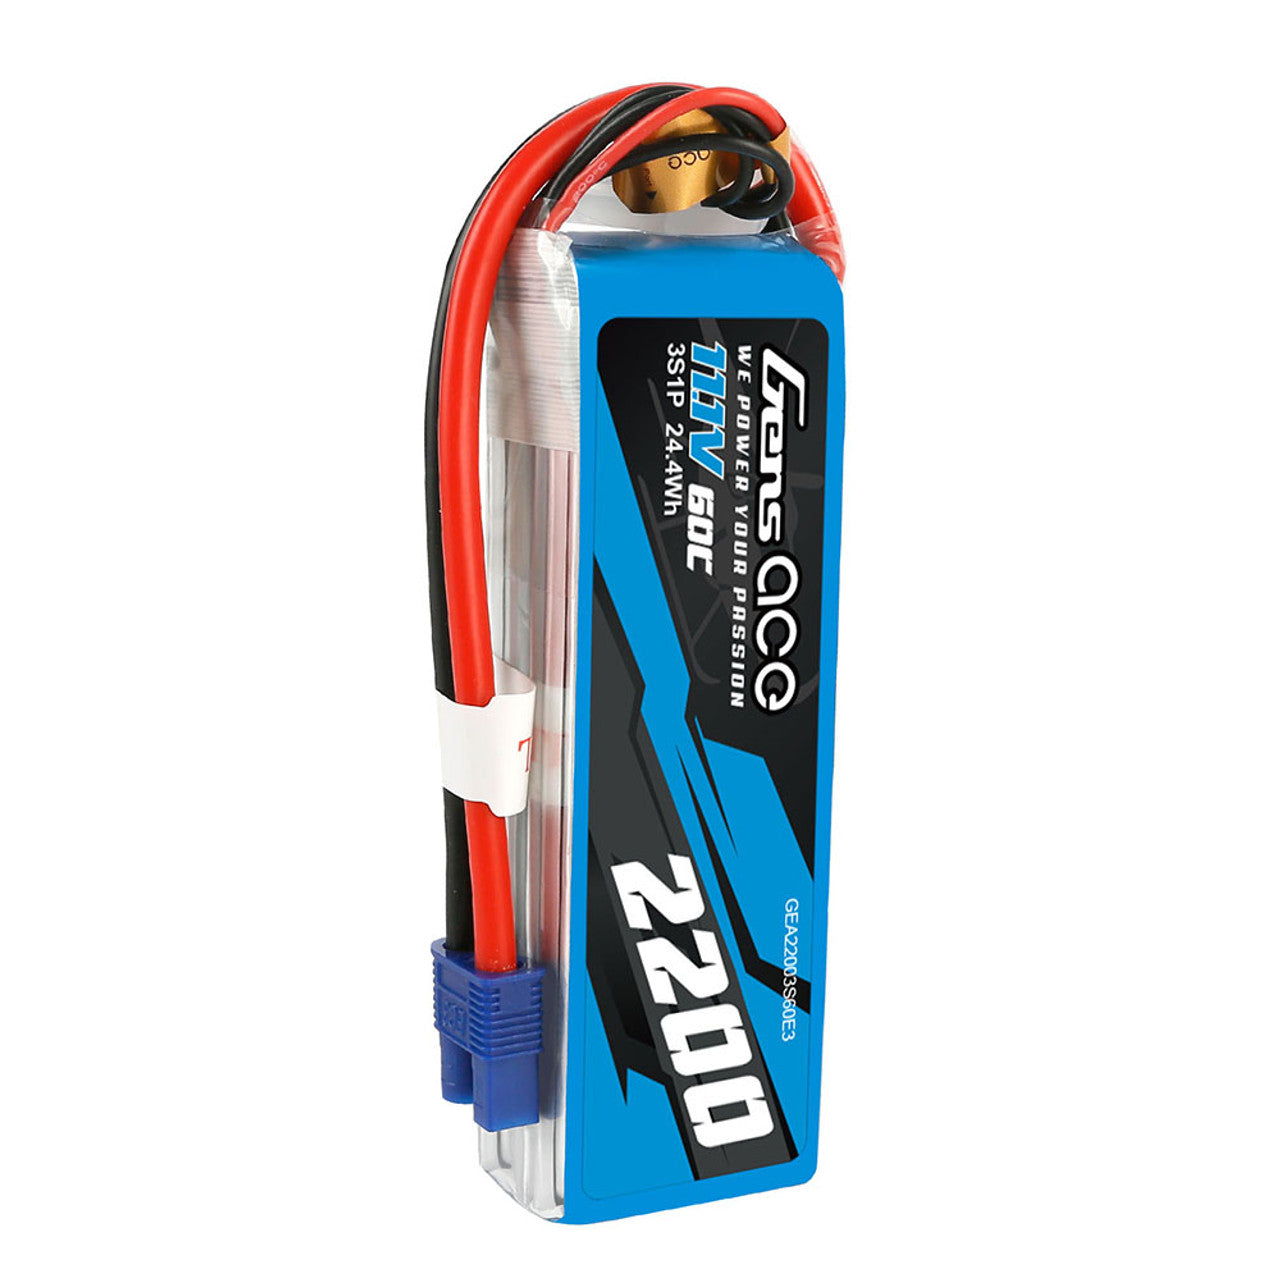 GEA22003S60E3 Gens Ace 2200mAh 11.1V 60C 3S1P Lipo Battery Pack With EC3 Plug